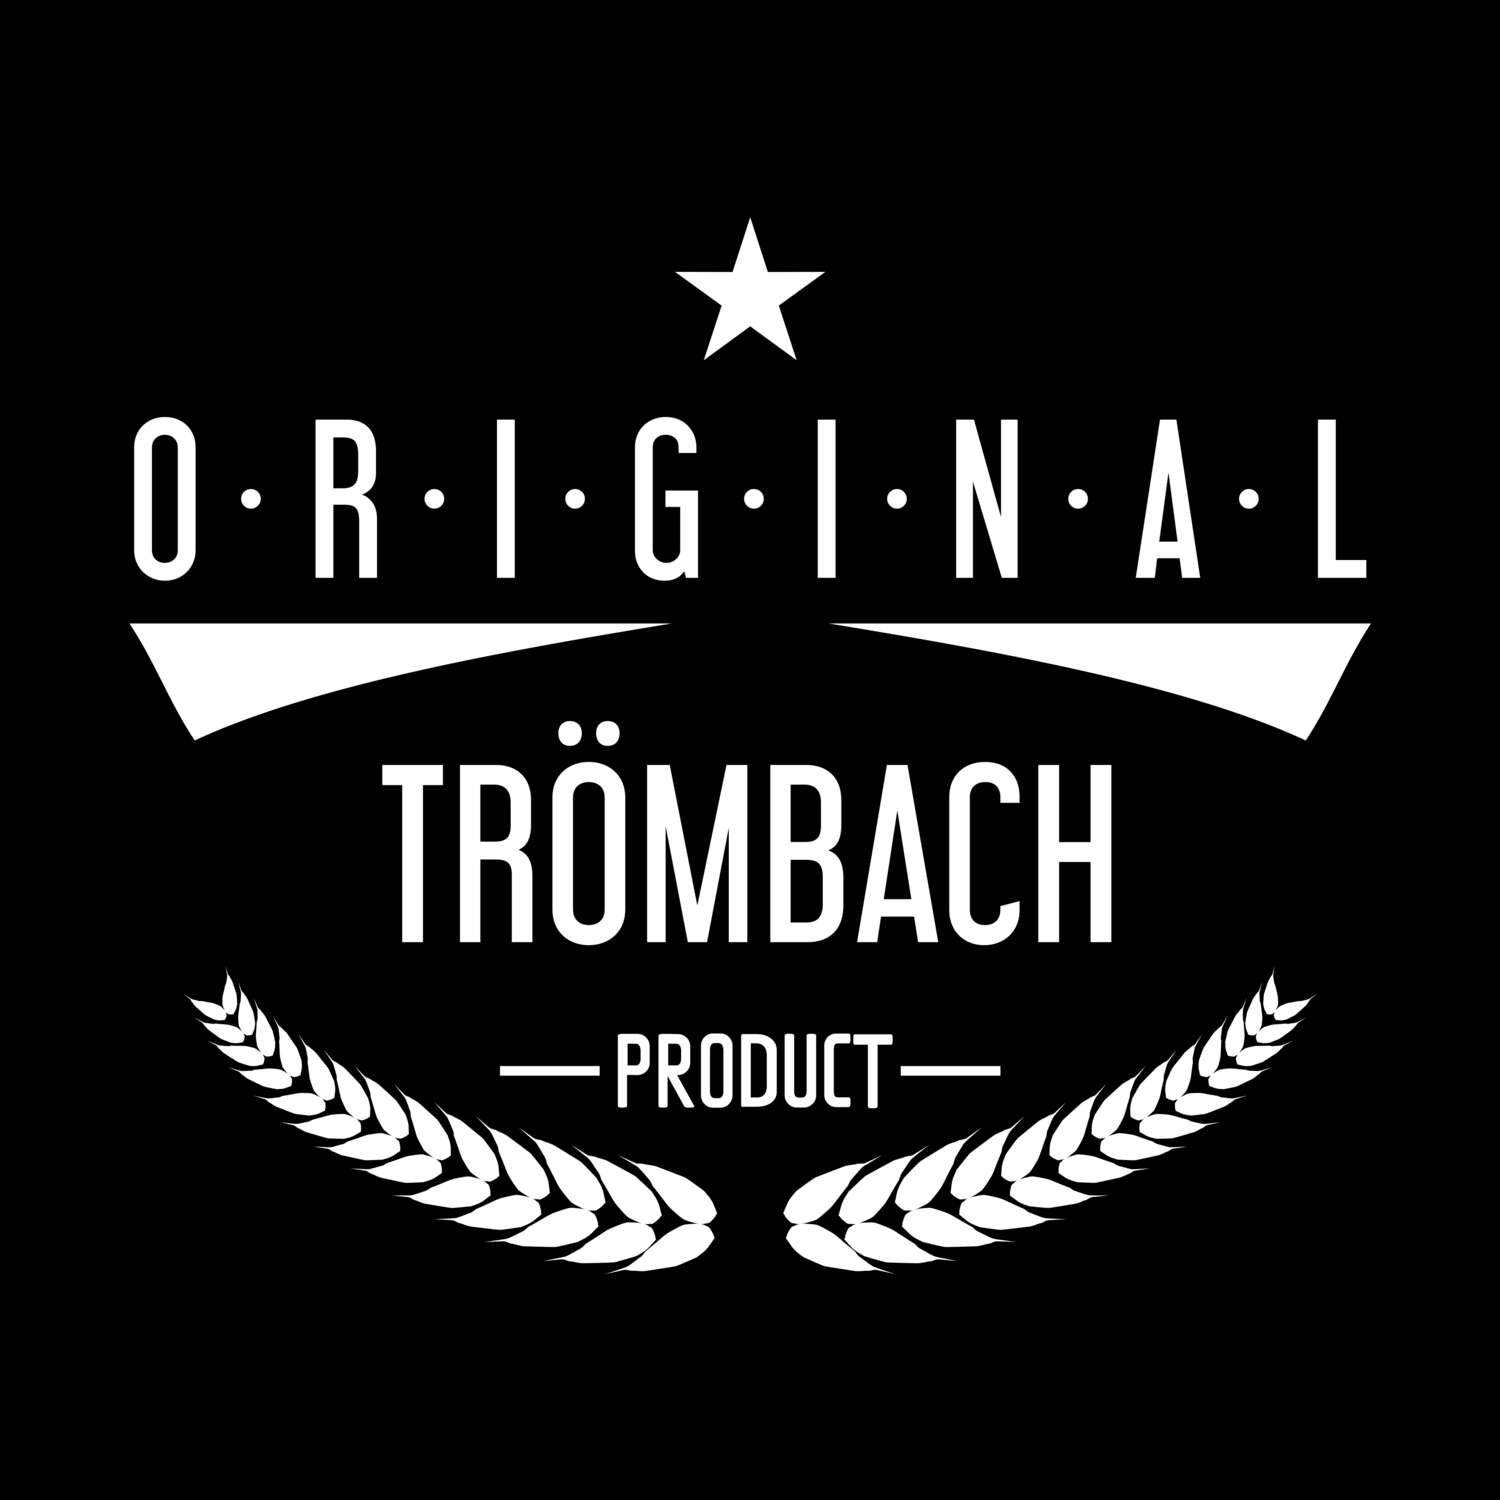 Trömbach T-Shirt »Original Product«